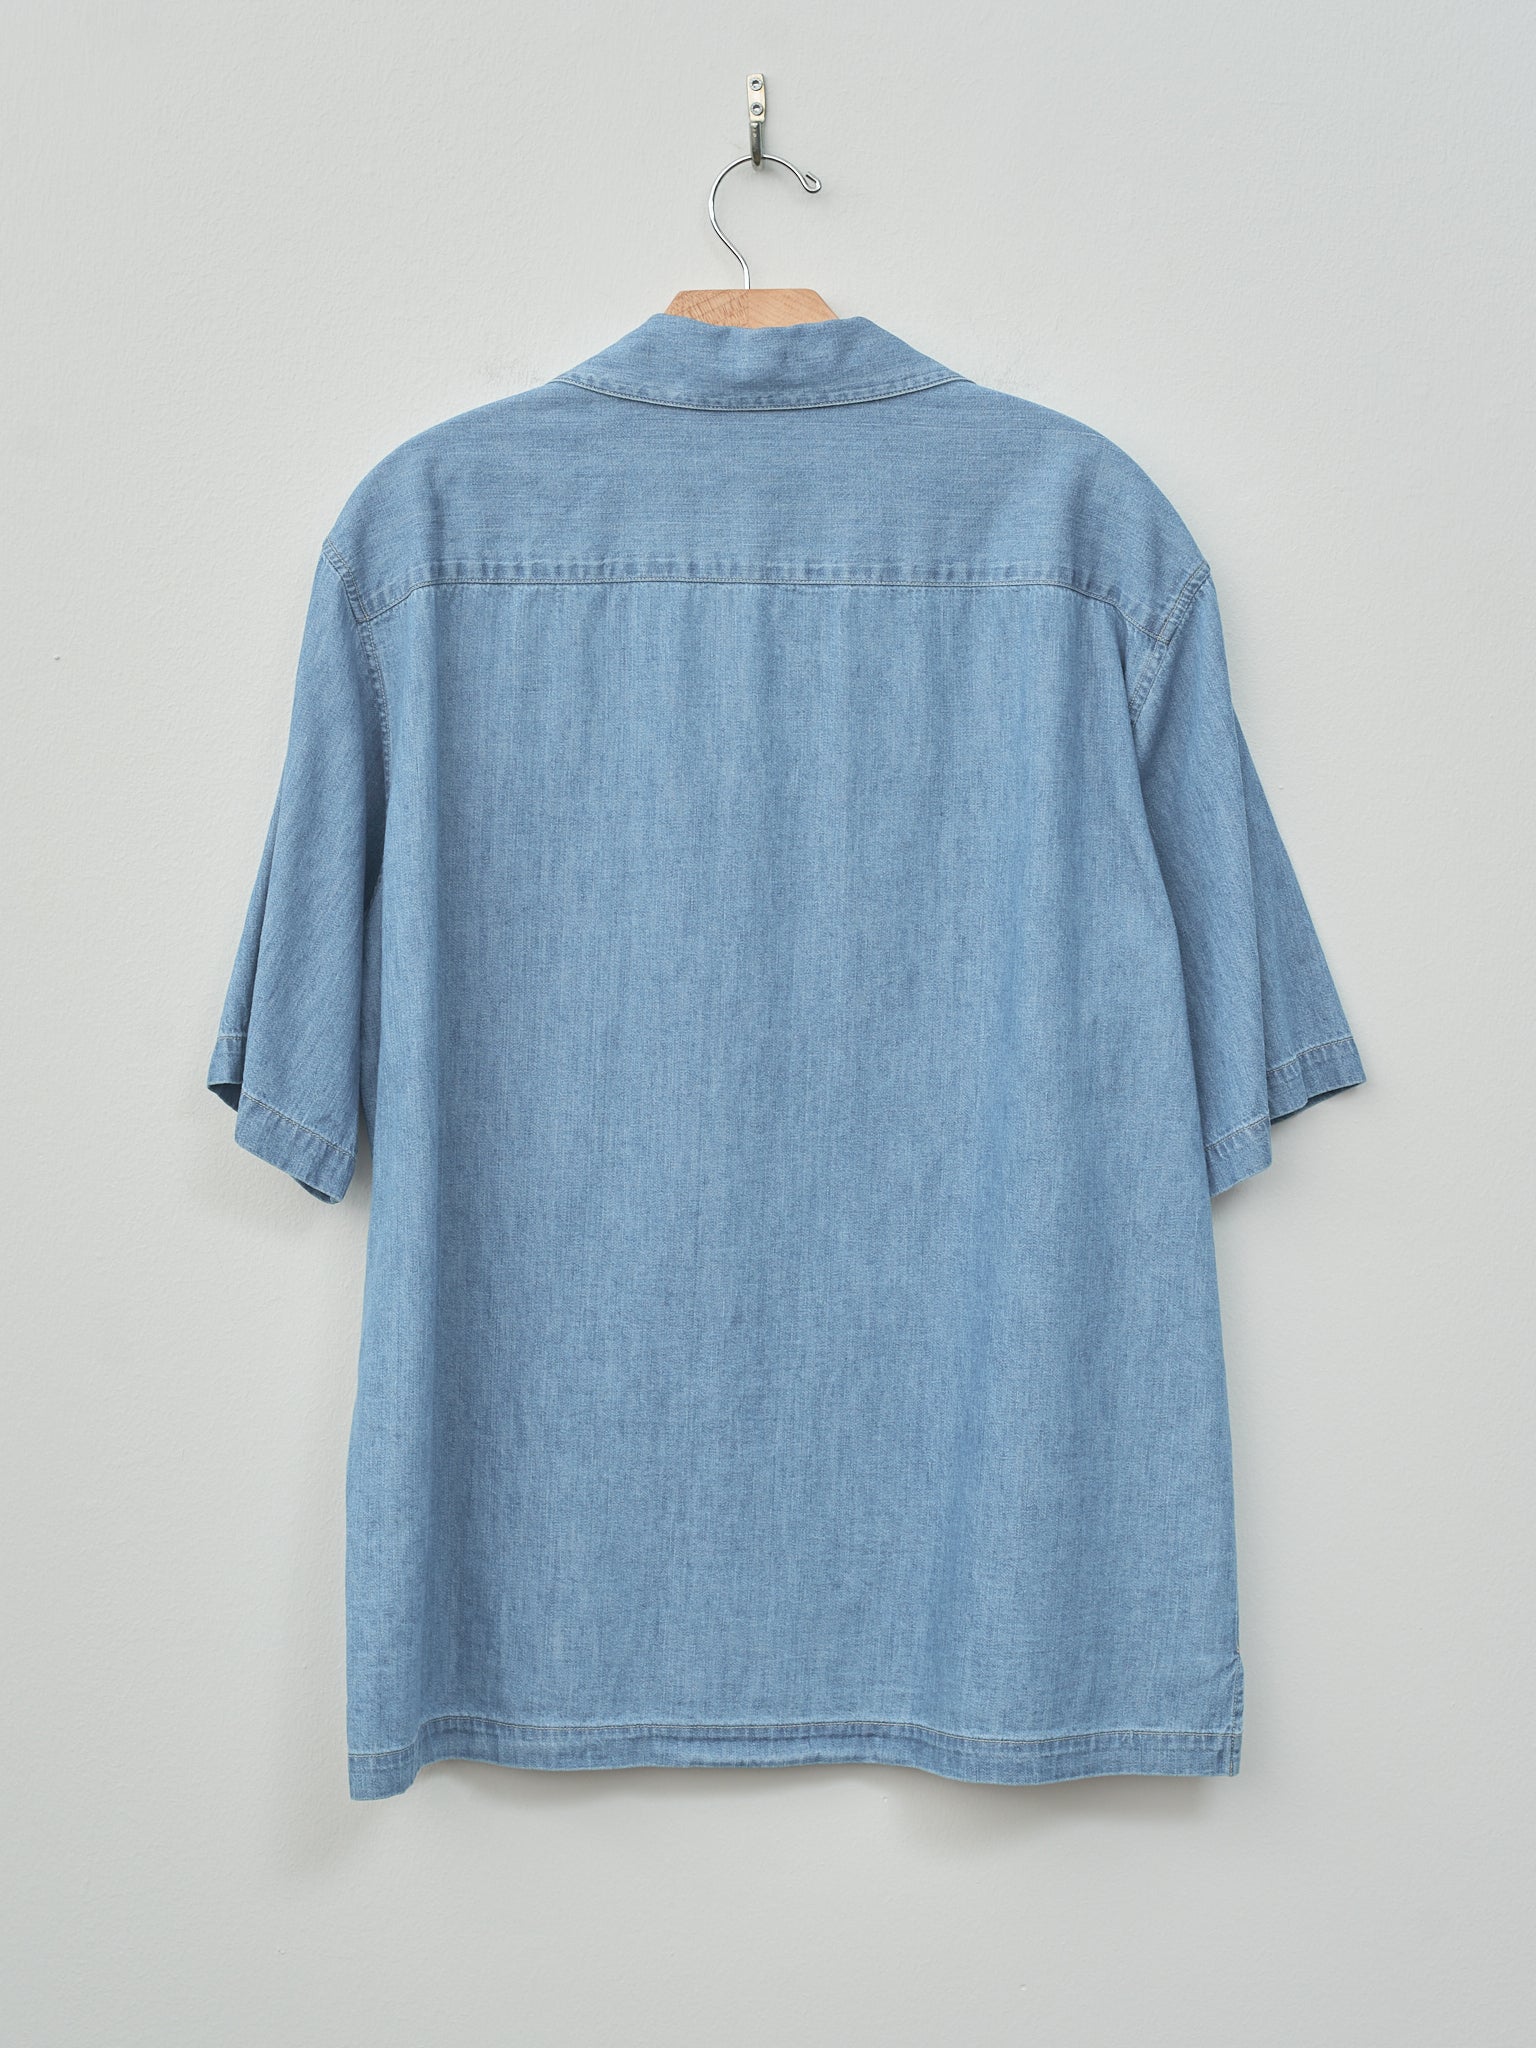 Namu Shop - Auralee Selvedge Super Light Denim Half Sleeved Shirt - Washed Indigo